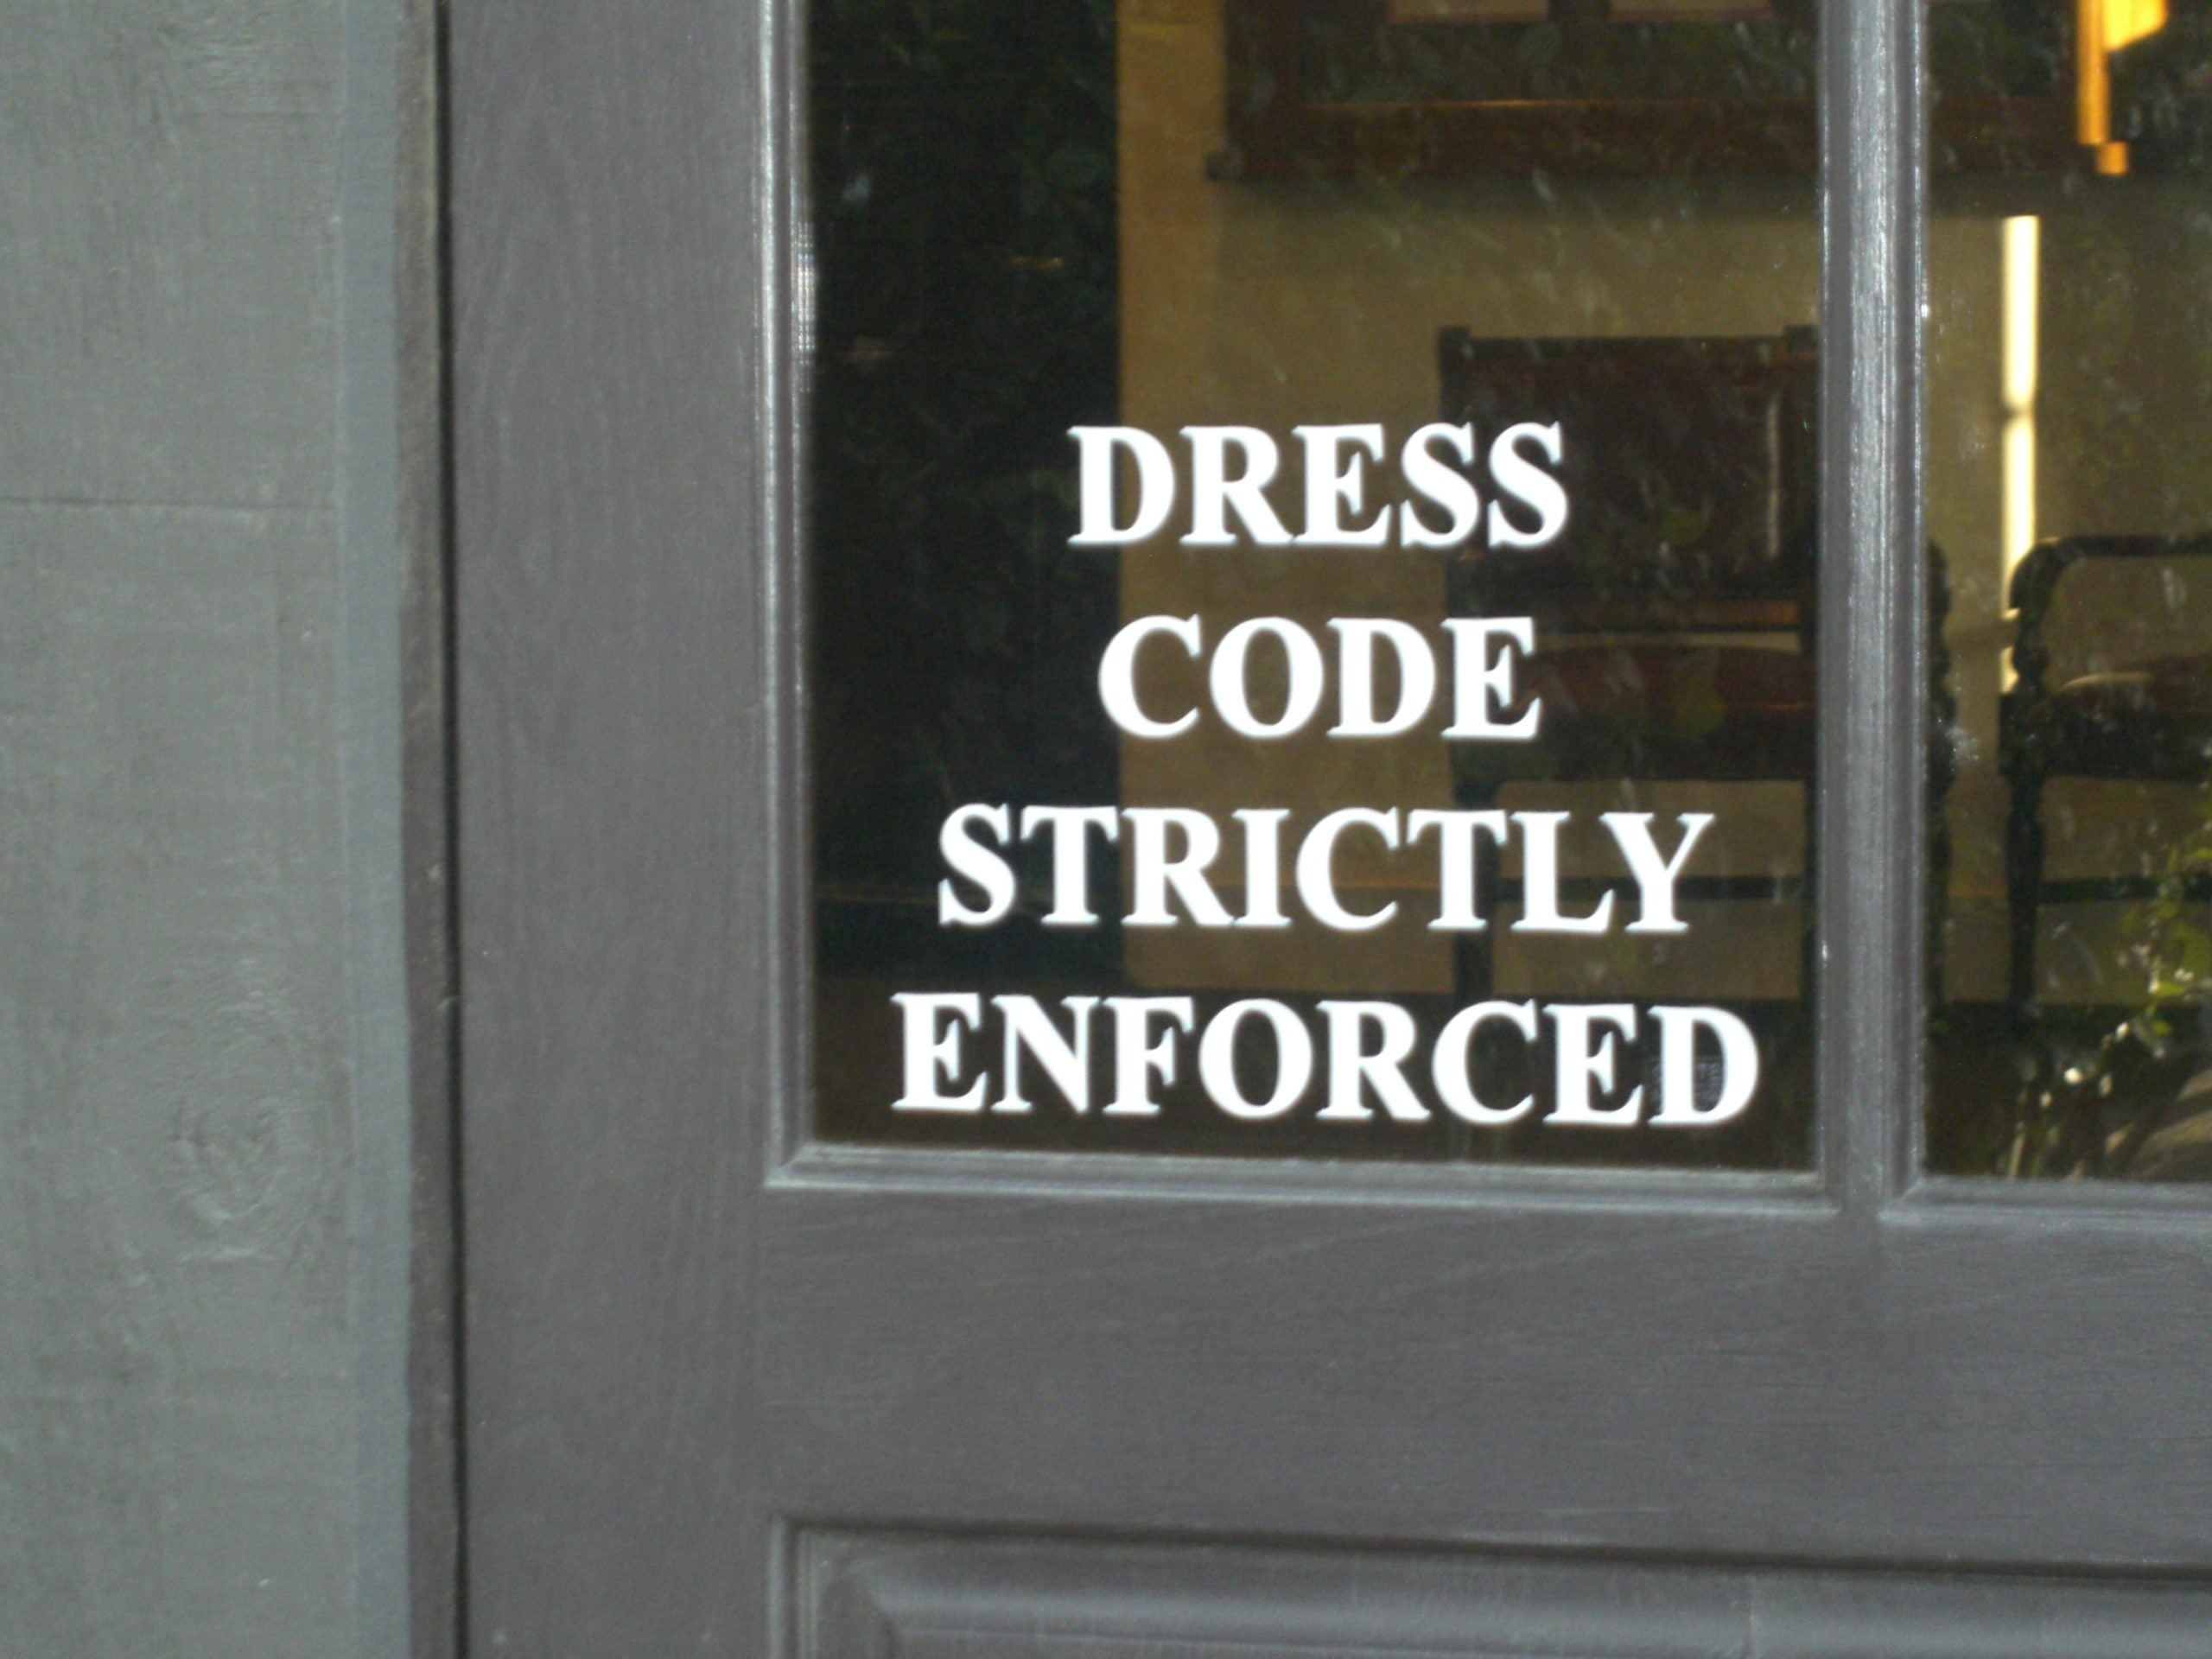 Dress codes: business etiquette for men - bugatti